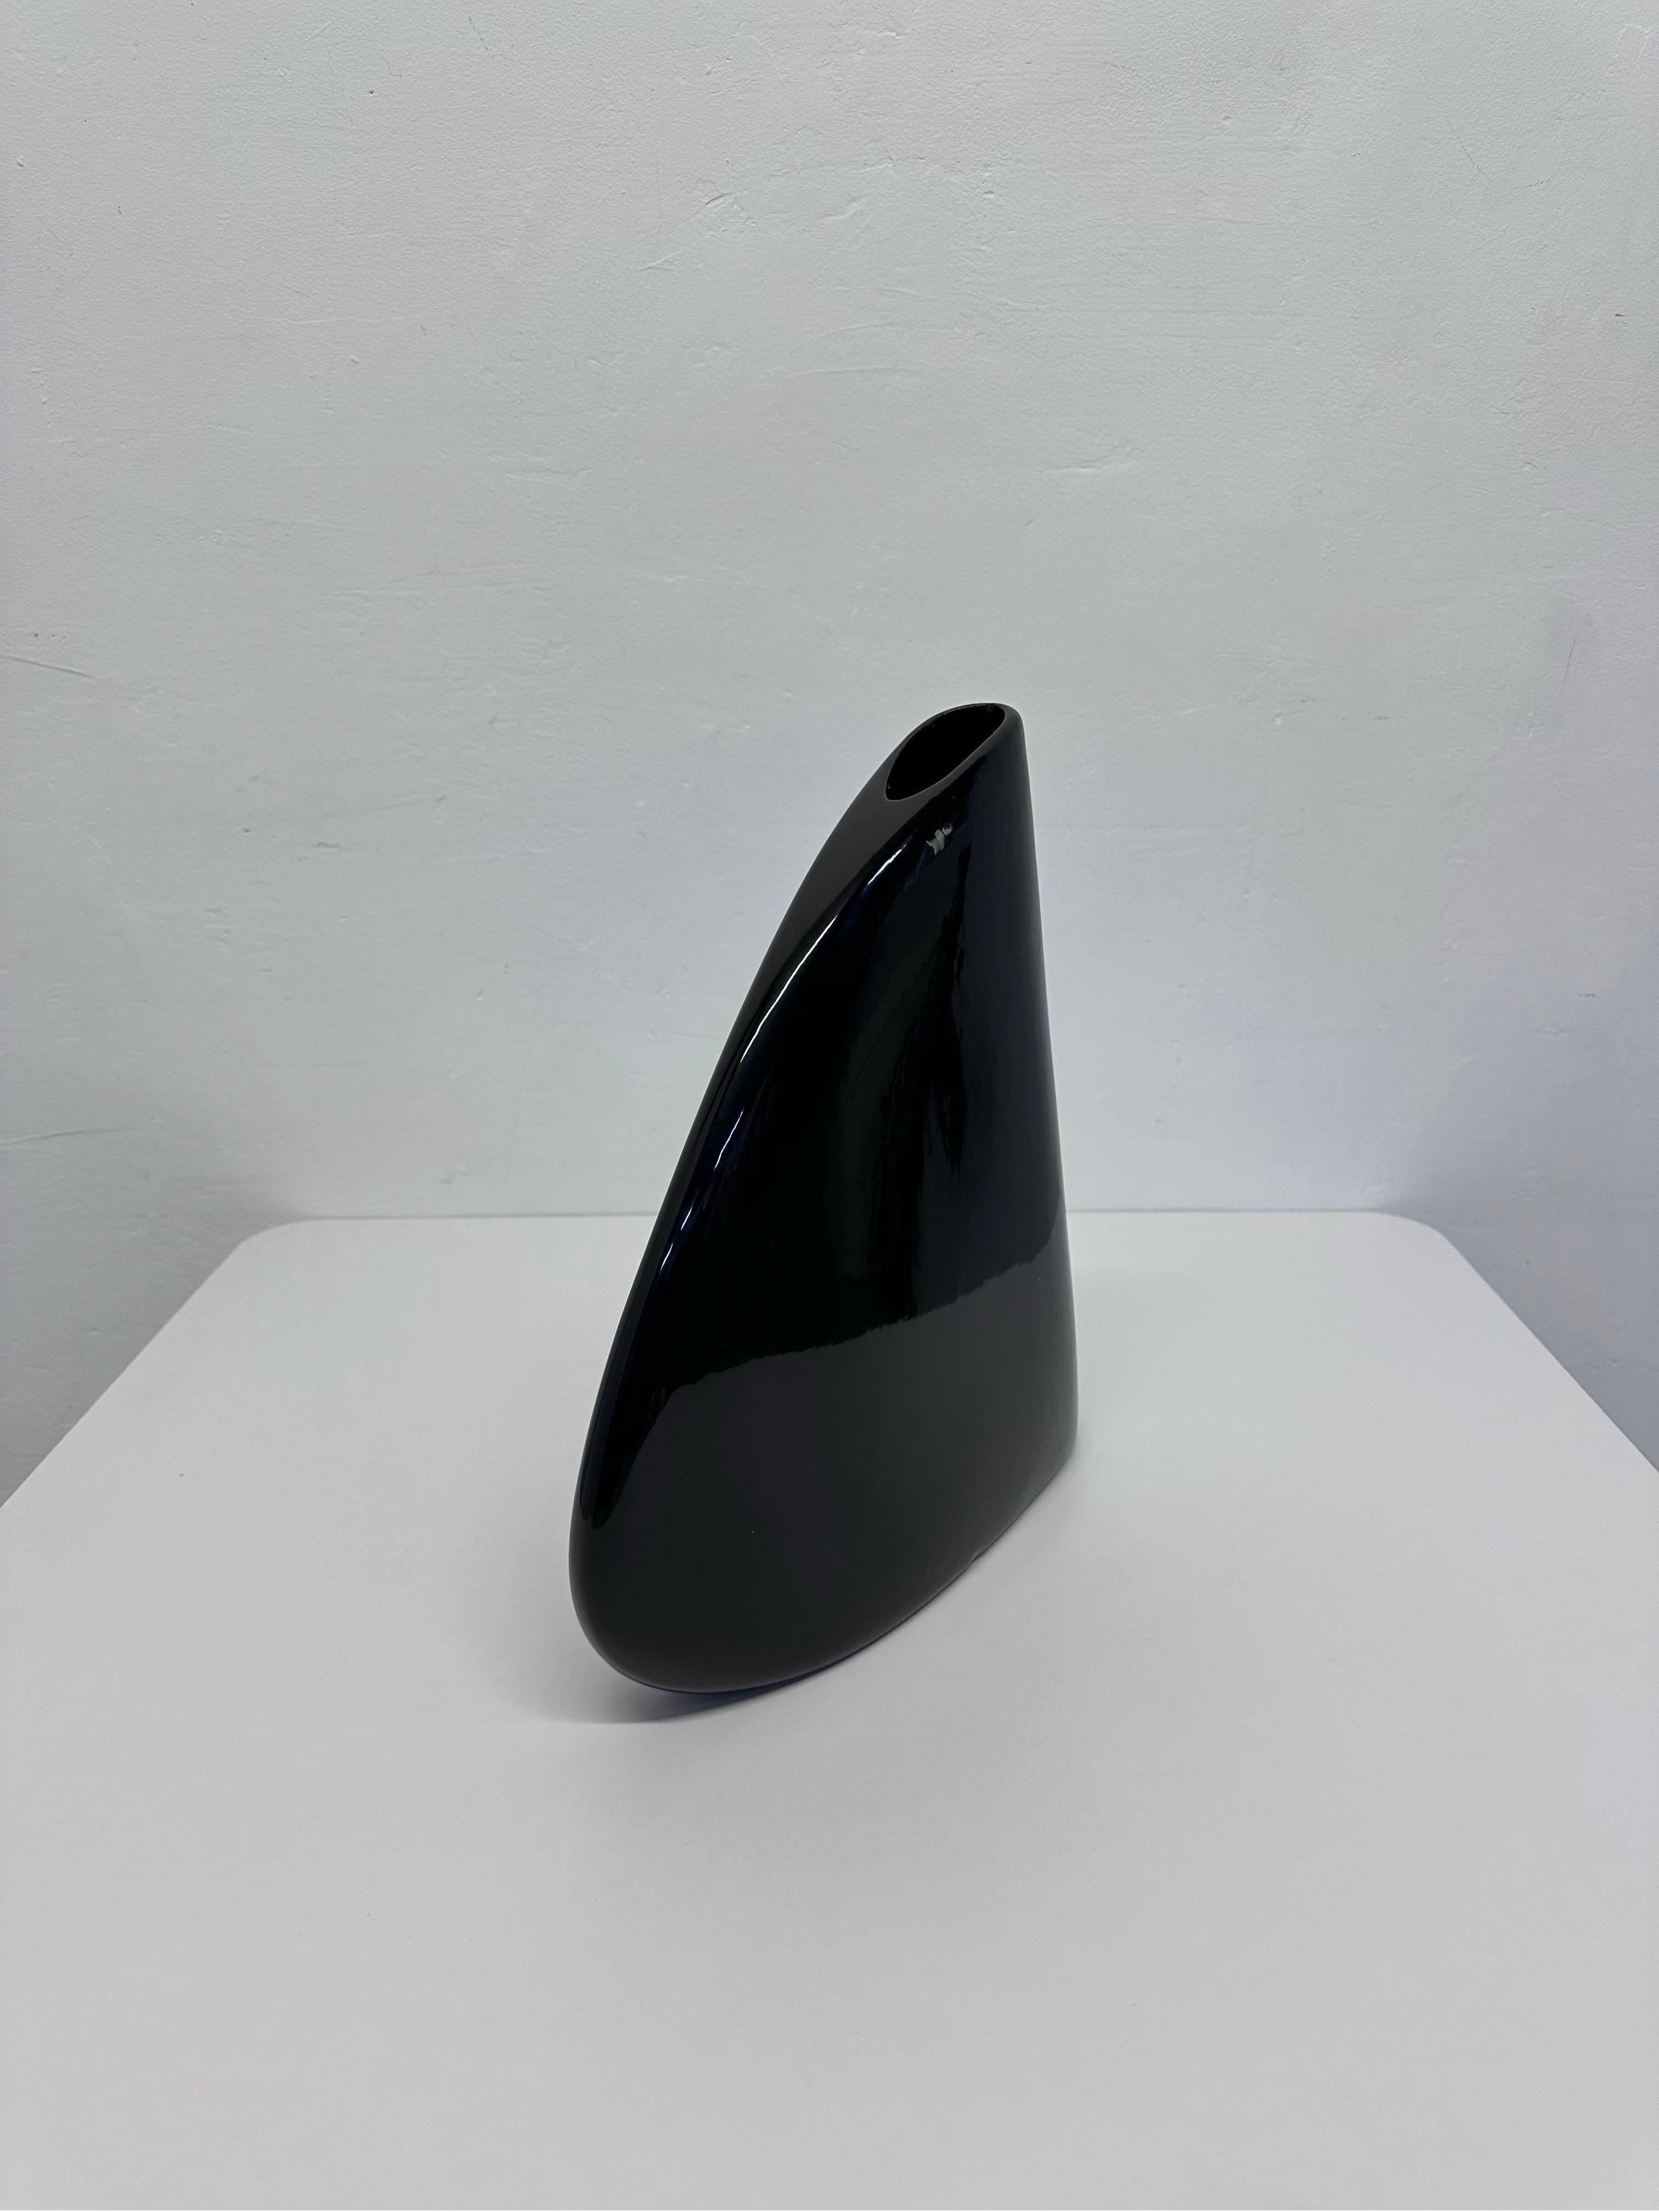 American Modern Black Ceramic Vase by Haeger, 1985 For Sale